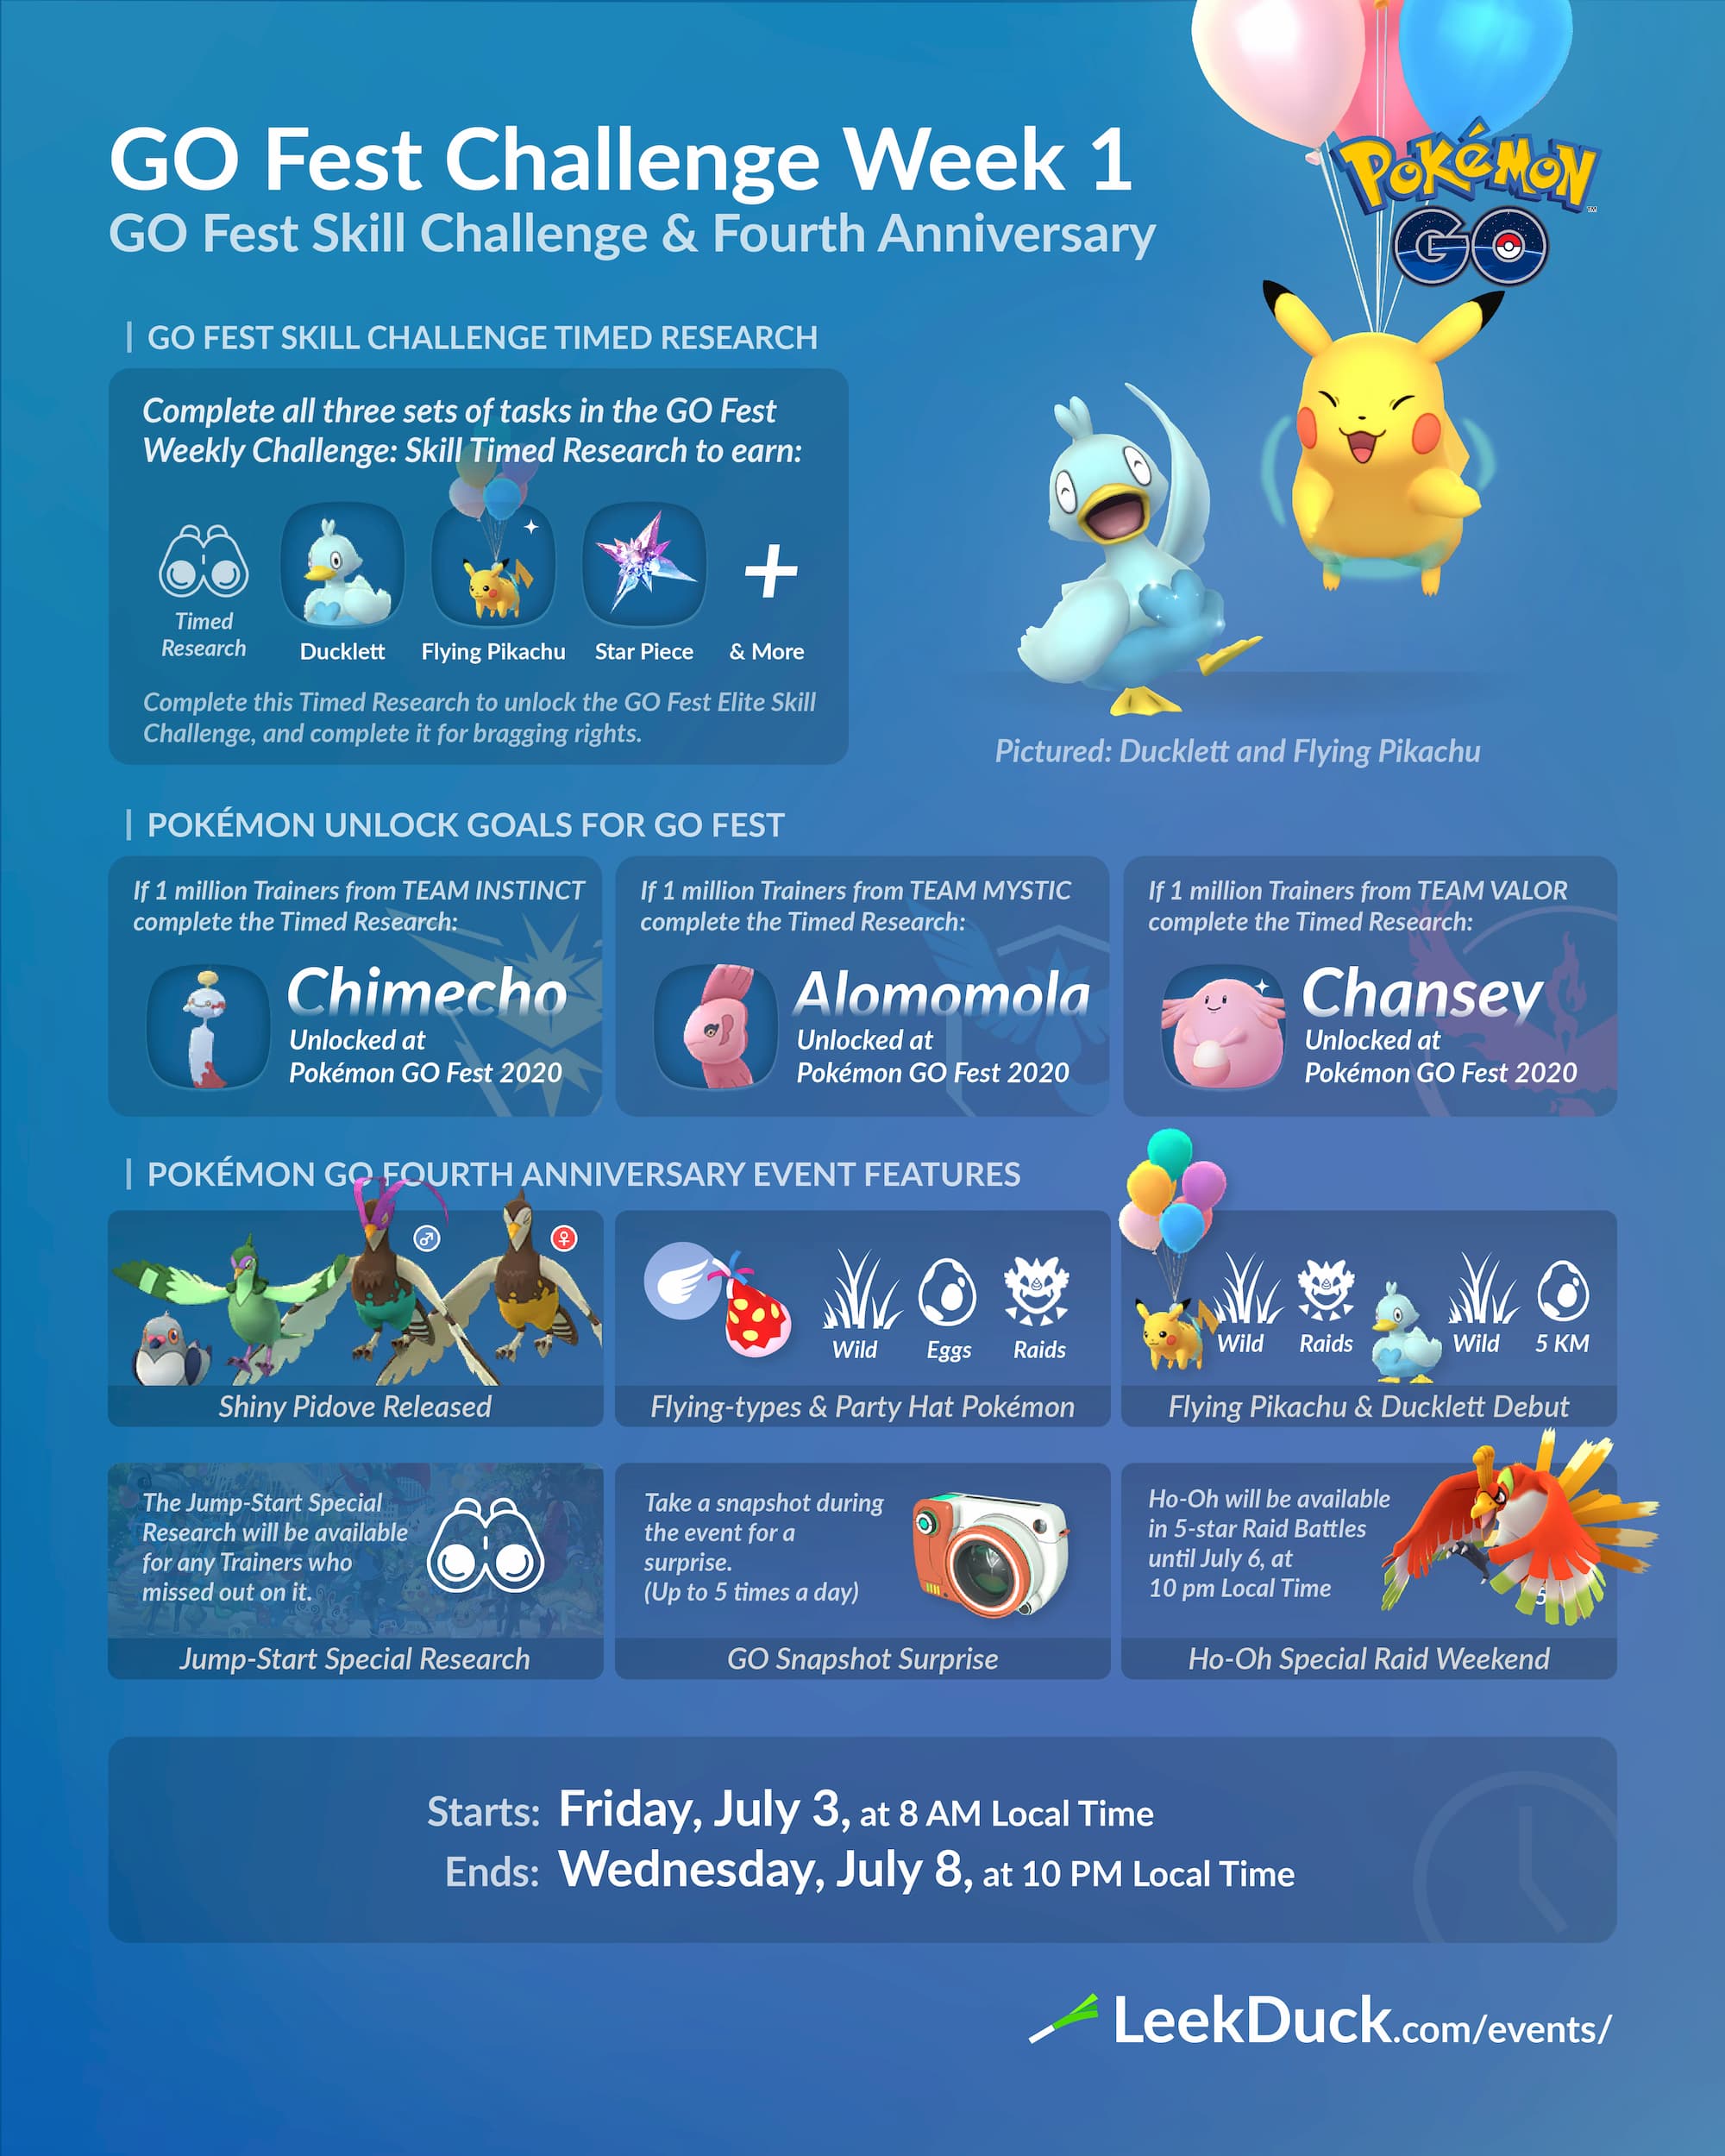 Go Fest Week 1 Challenge Skill Leek Duck Pokemon Go News And Resources